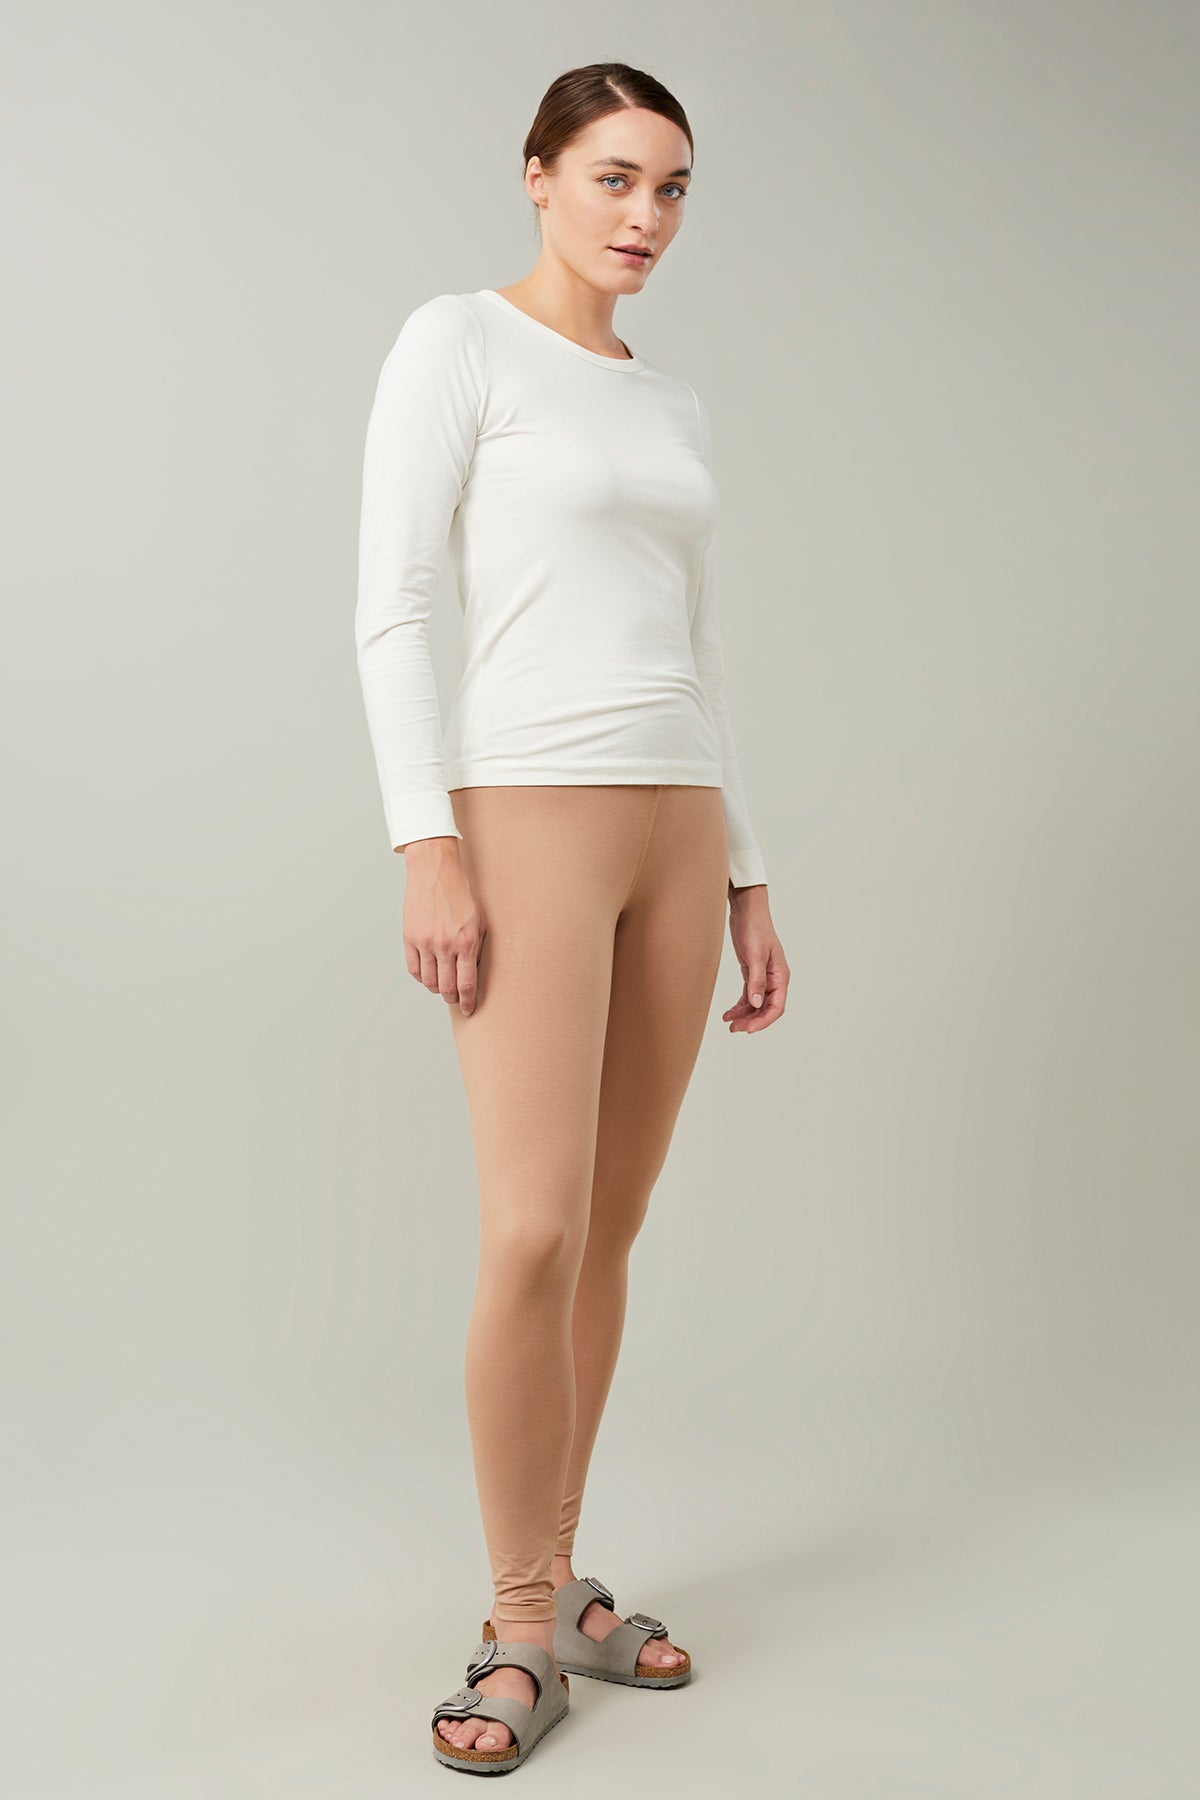 Mandala Yoga Shirt Weiß Outfit Front - French Shirt